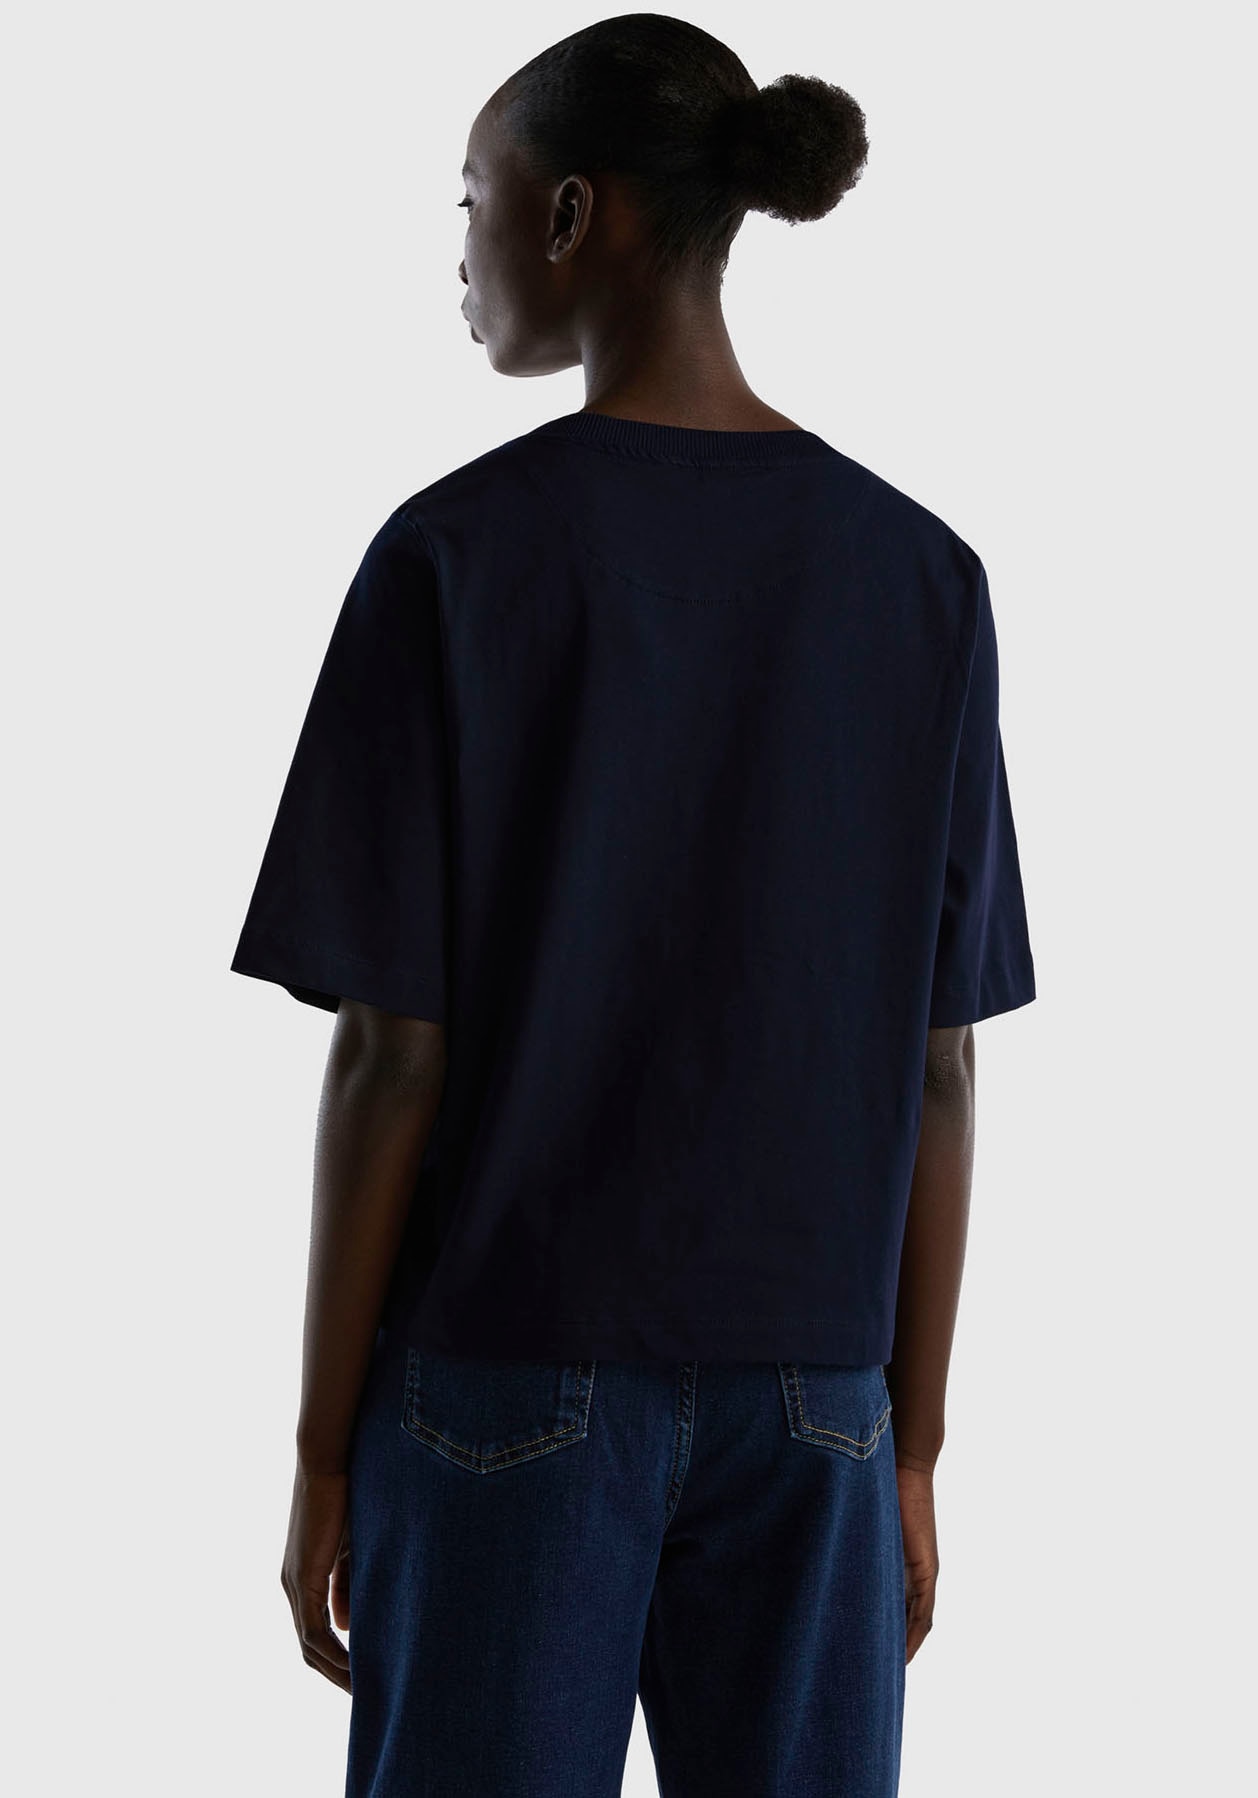 of bei Basic Benetton T-Shirt, OTTO Colors Look im United bestellen